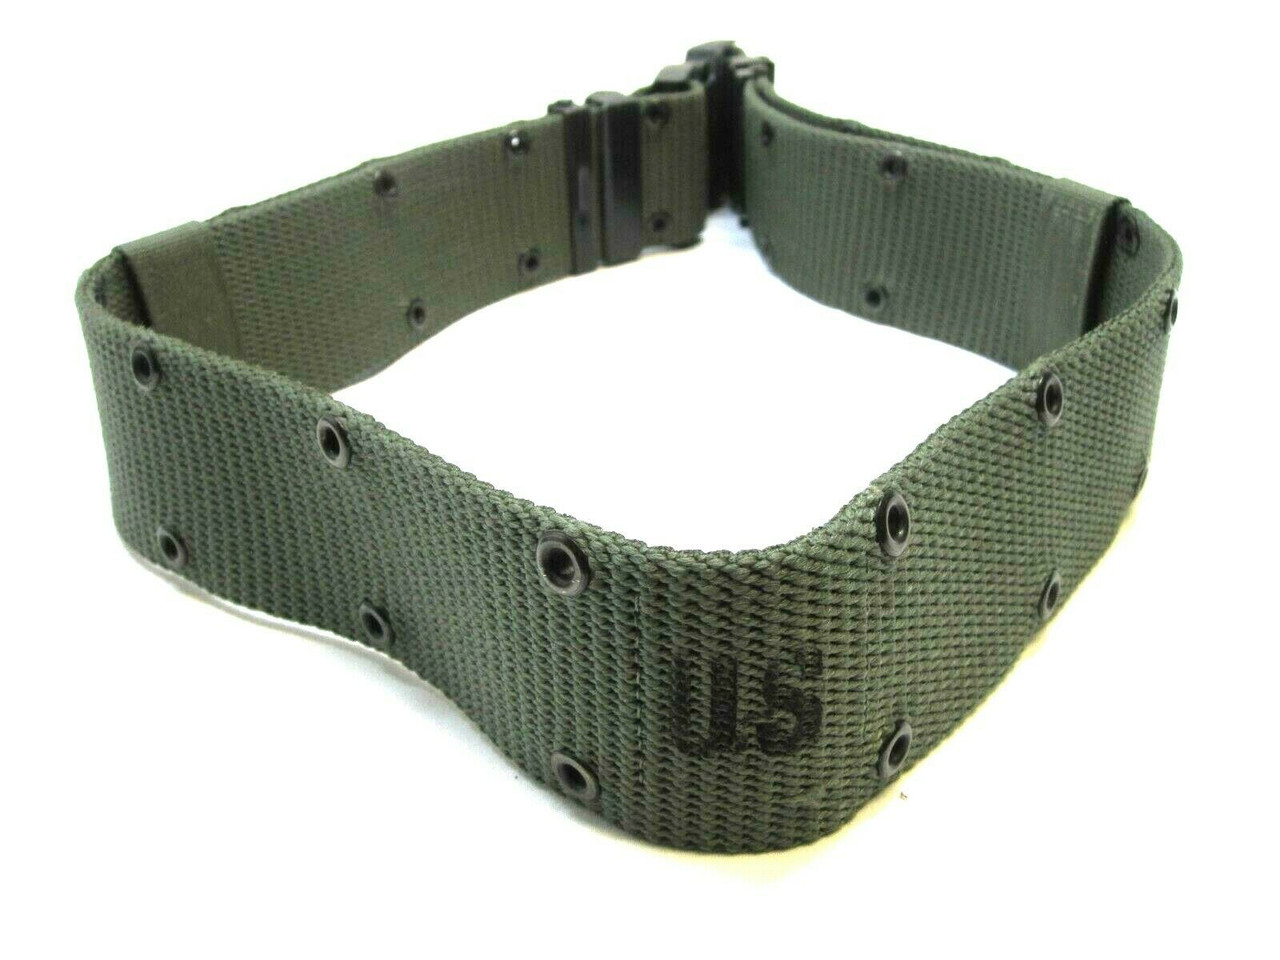 Original U.S army webbing system web suspenders belt LC-2 military